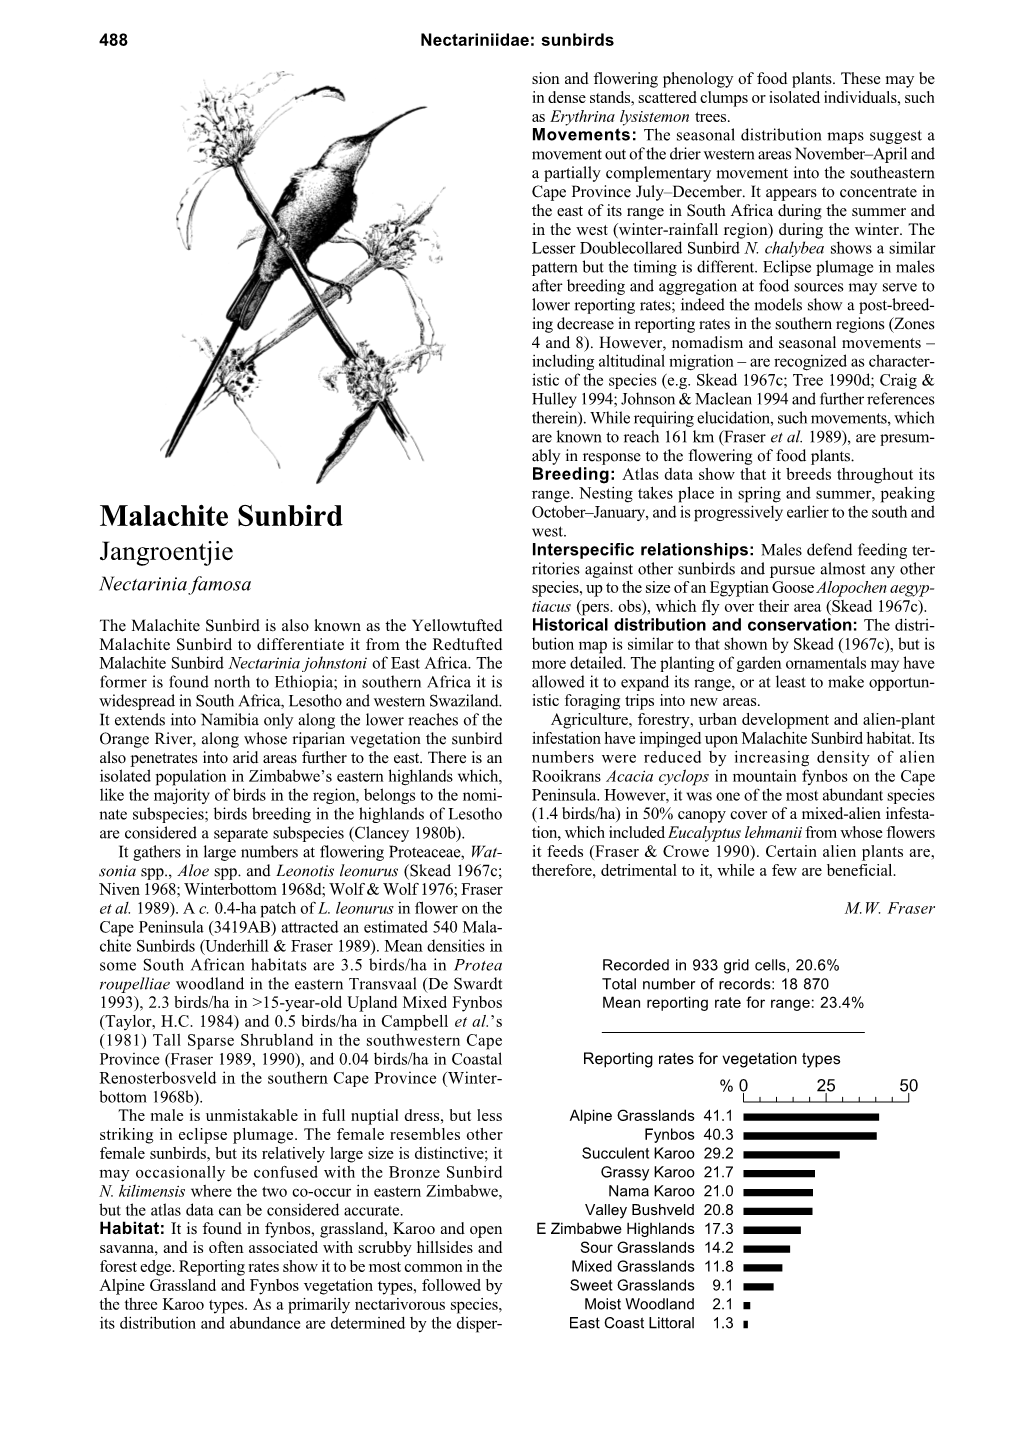 Malachite Sunbird West